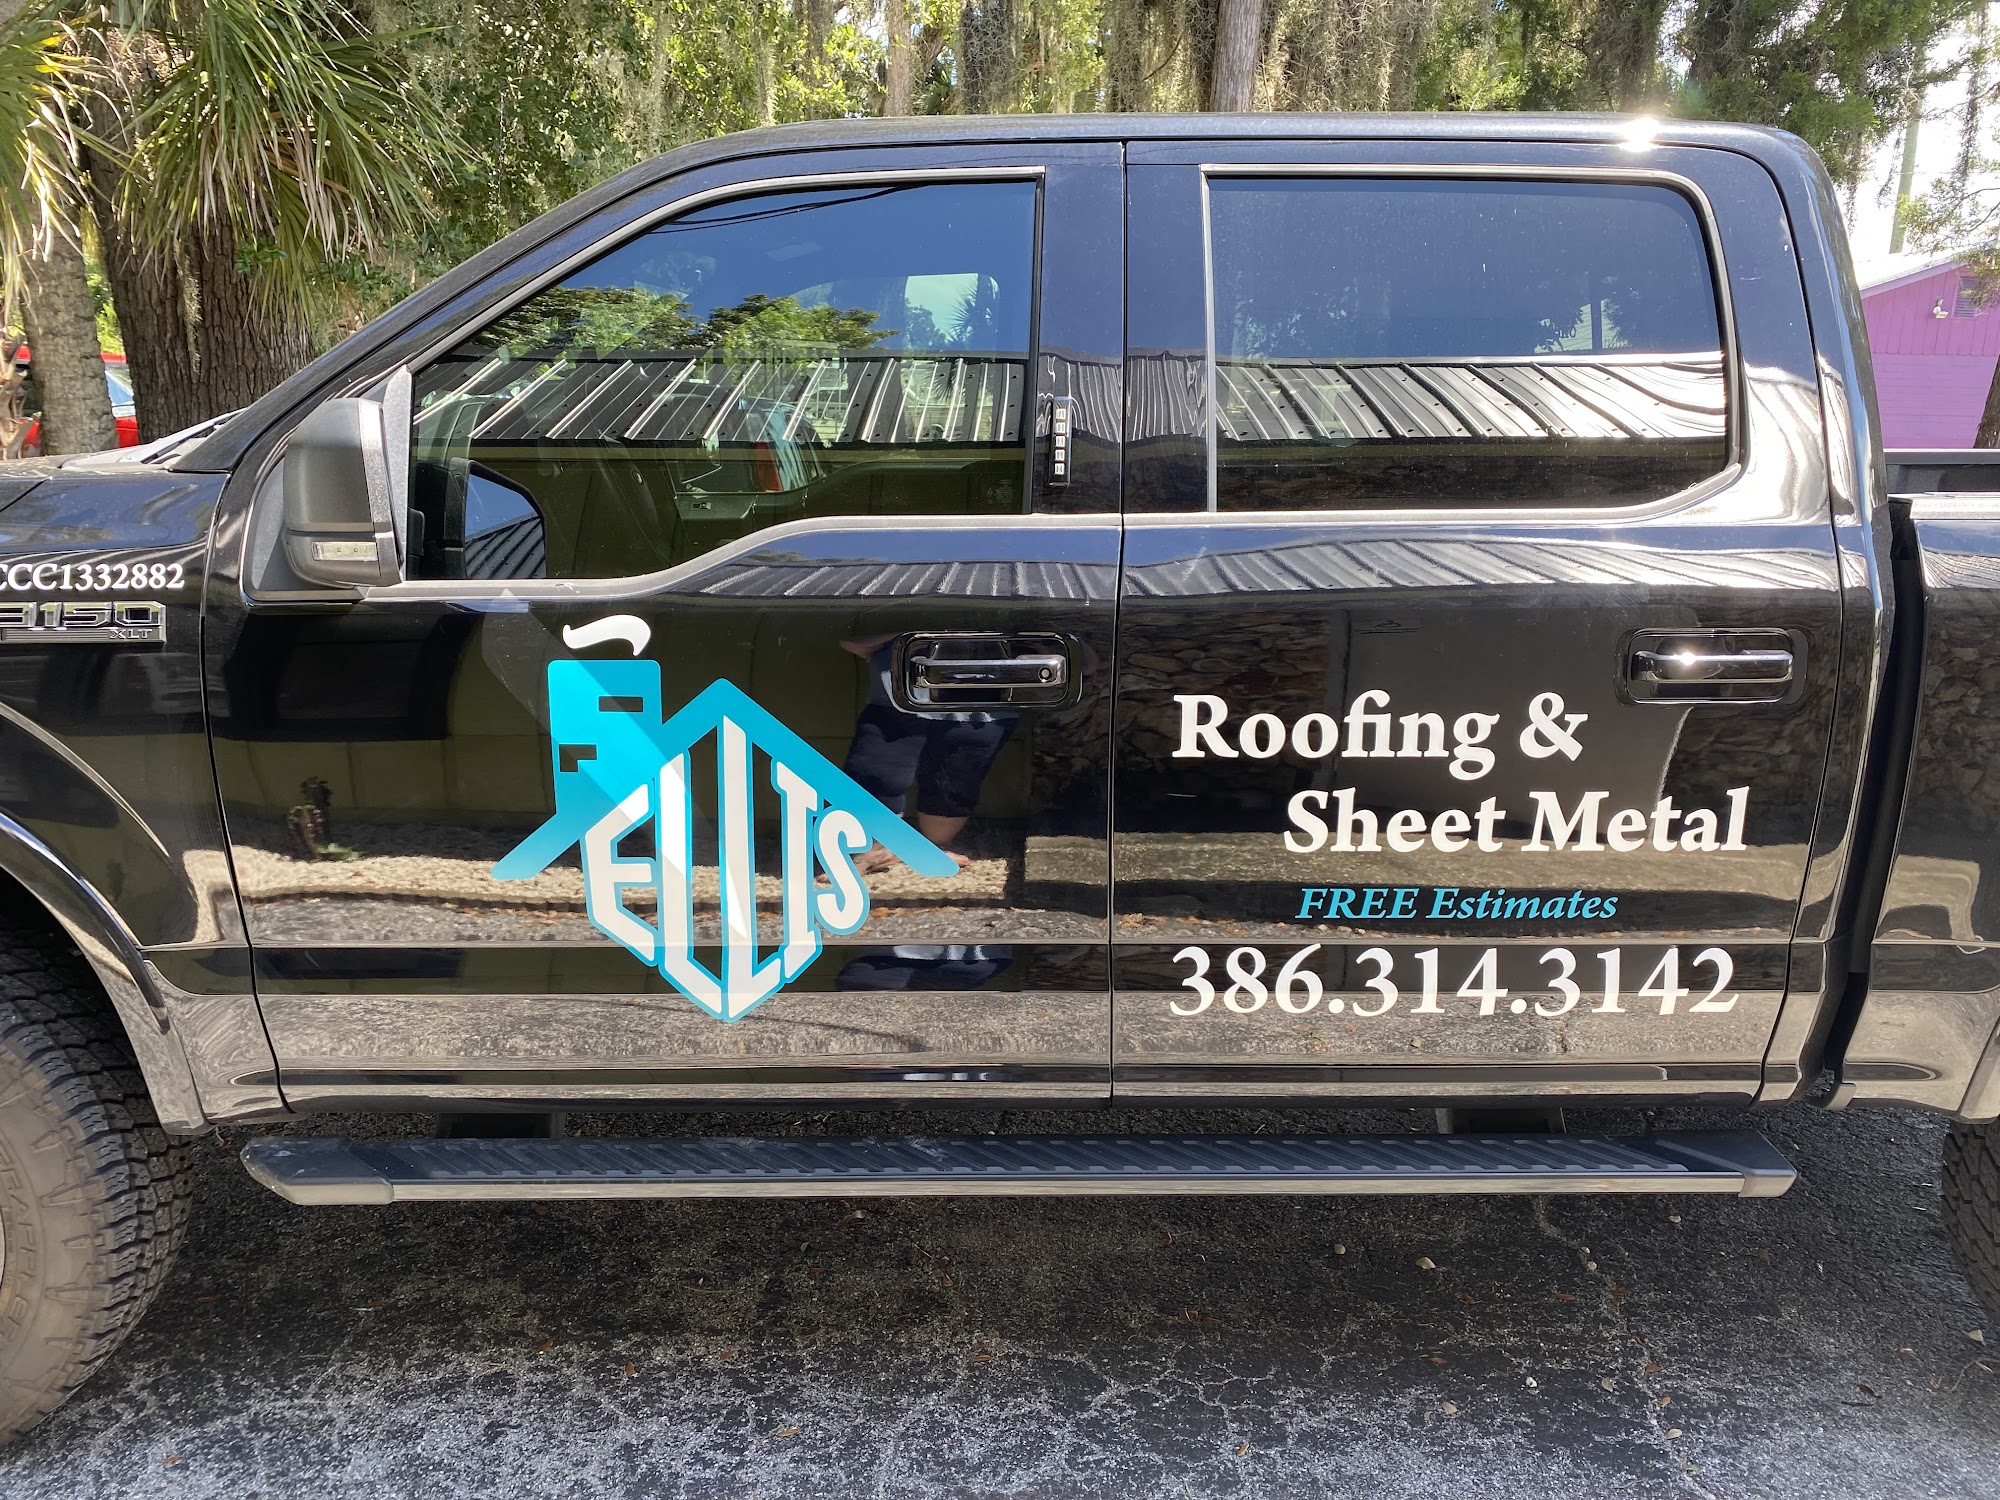 Ellis Roofing & Sheet Metal LLC